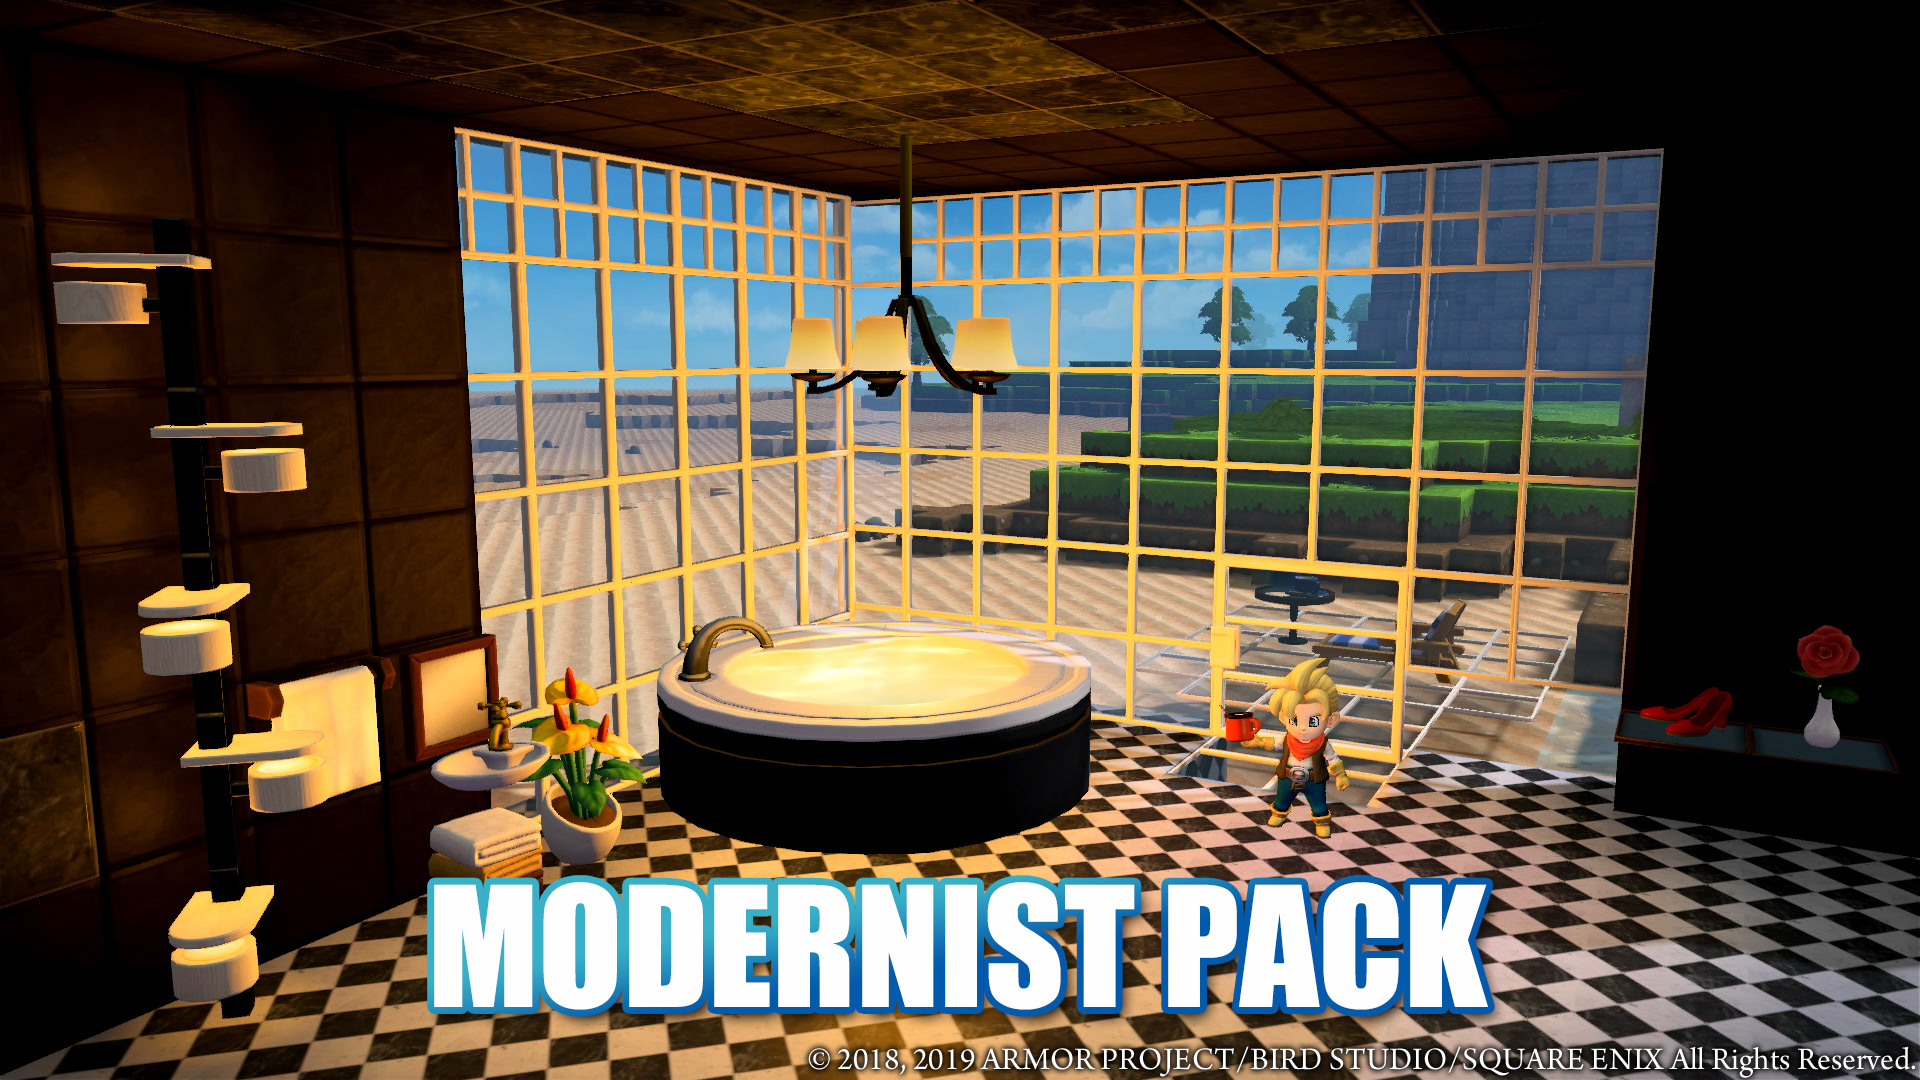 Modernist Pack